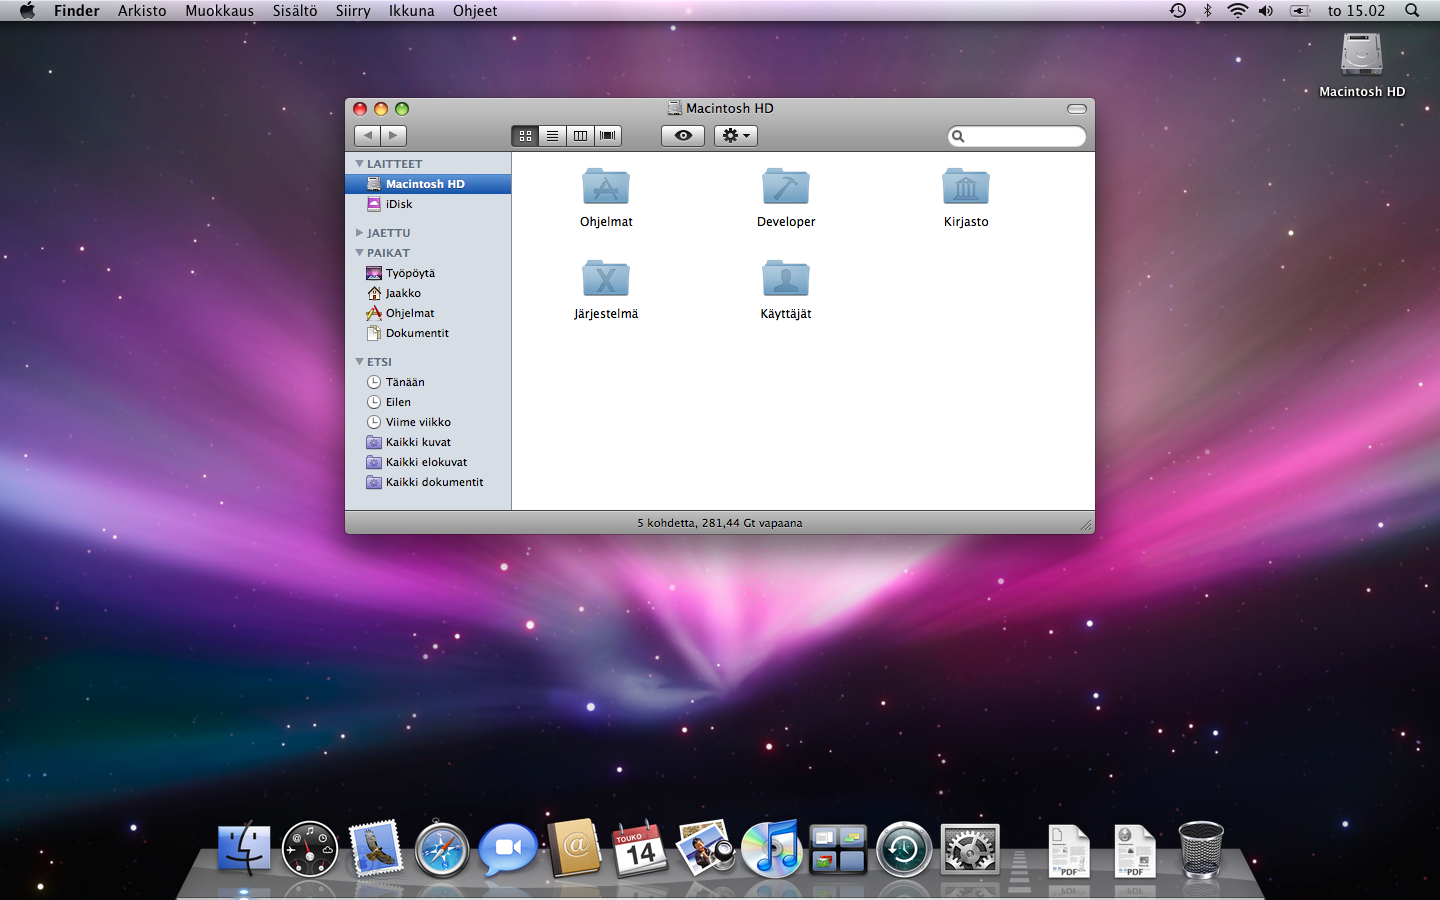 Mac Os 10.5 Download Freeware